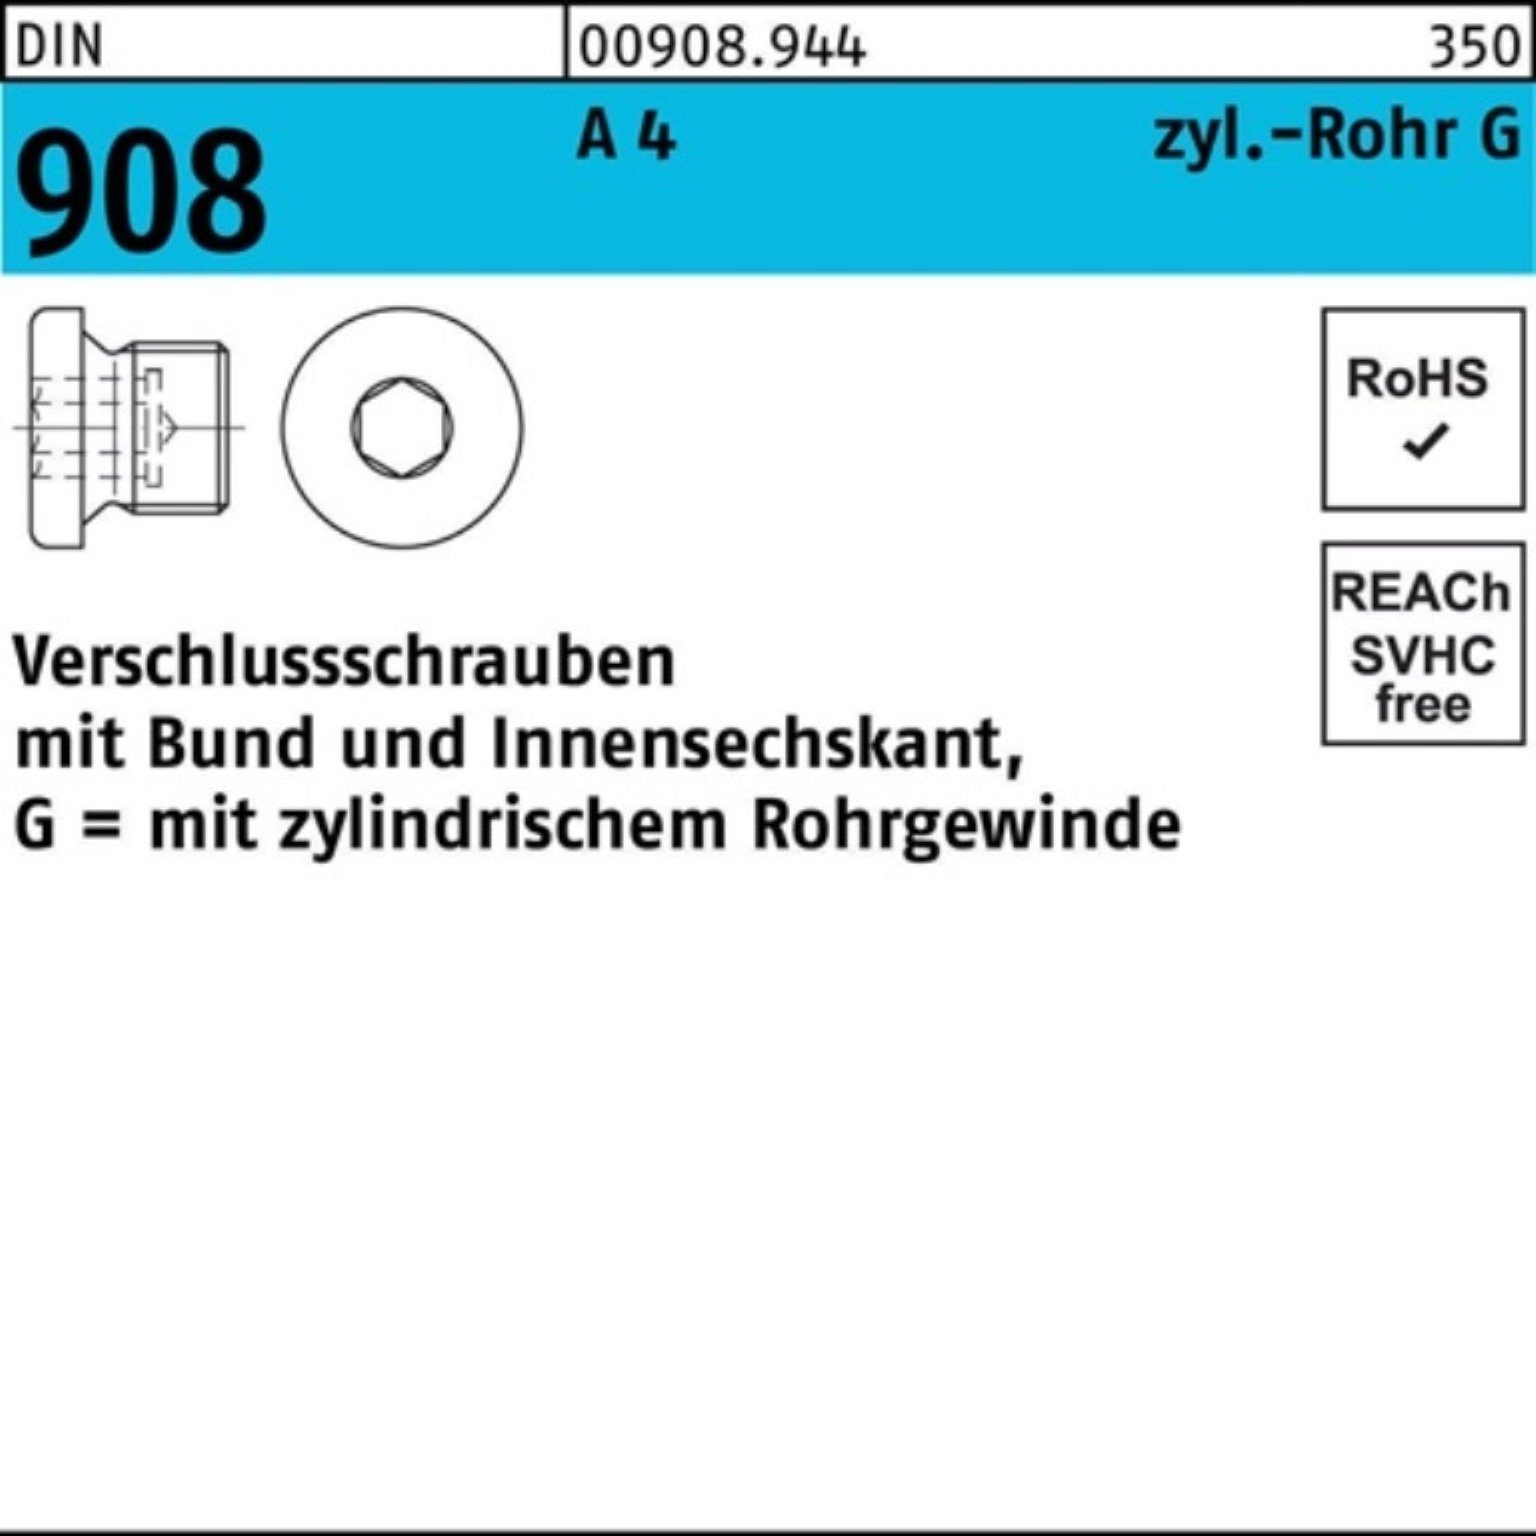 Reyher Schraube 100er Pack 2 DIN 4 Verschlußschraube Stüc G 908 1 A Bund/Innen-6kt A